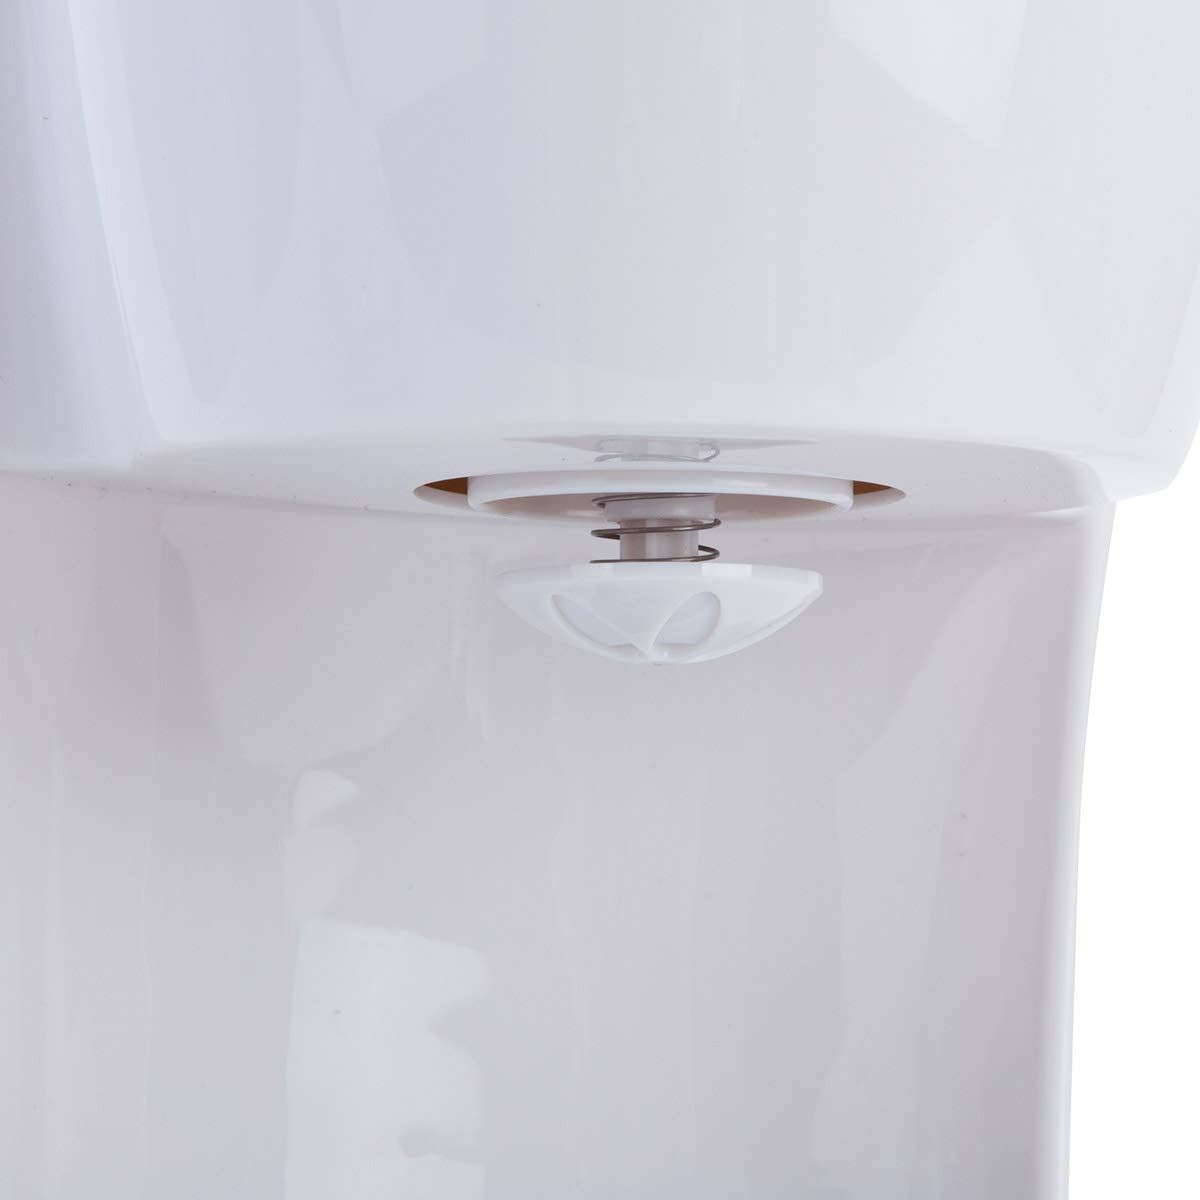 Drip Coffee Machine Jata Ca285 650 W 8 tazas blancas